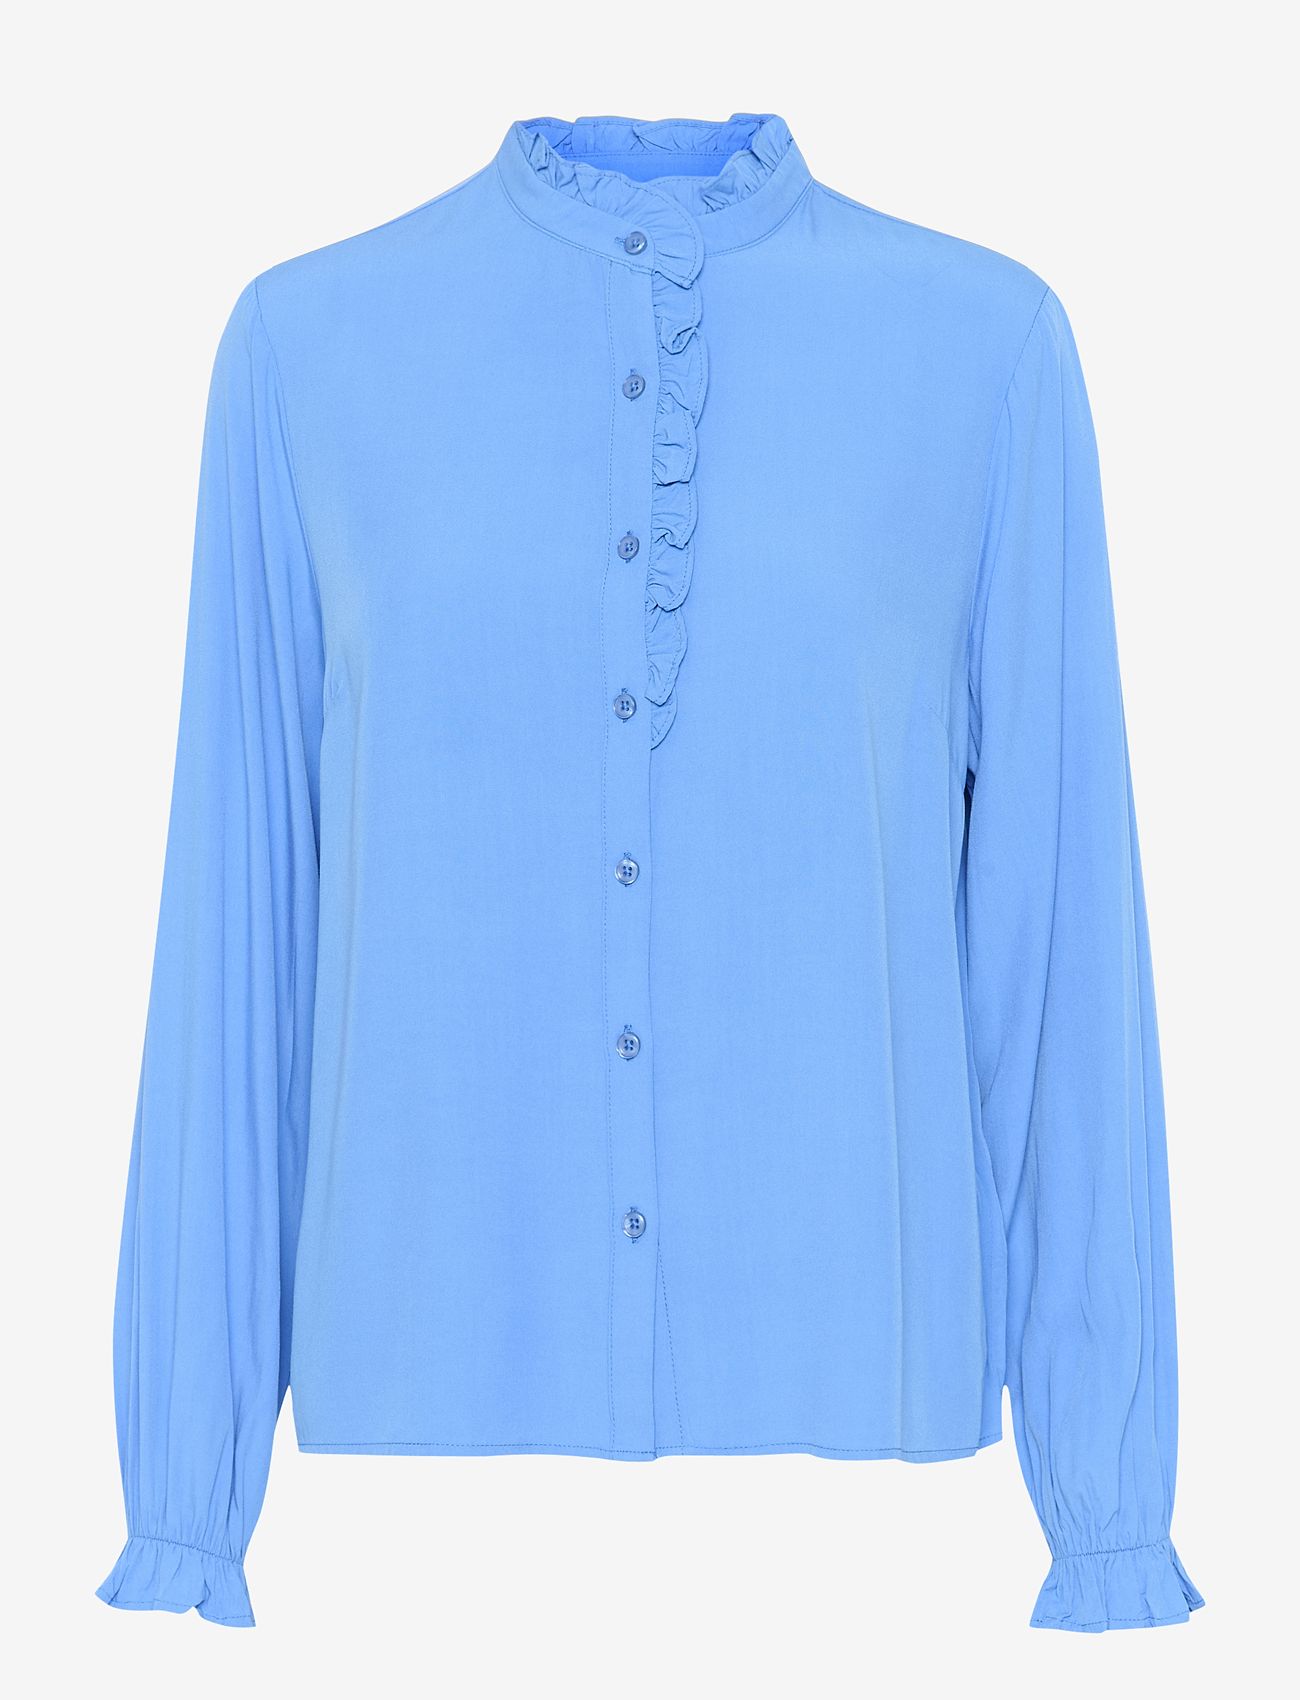 Cream - CRVenea Shirt - langærmede skjorter - marina - 0